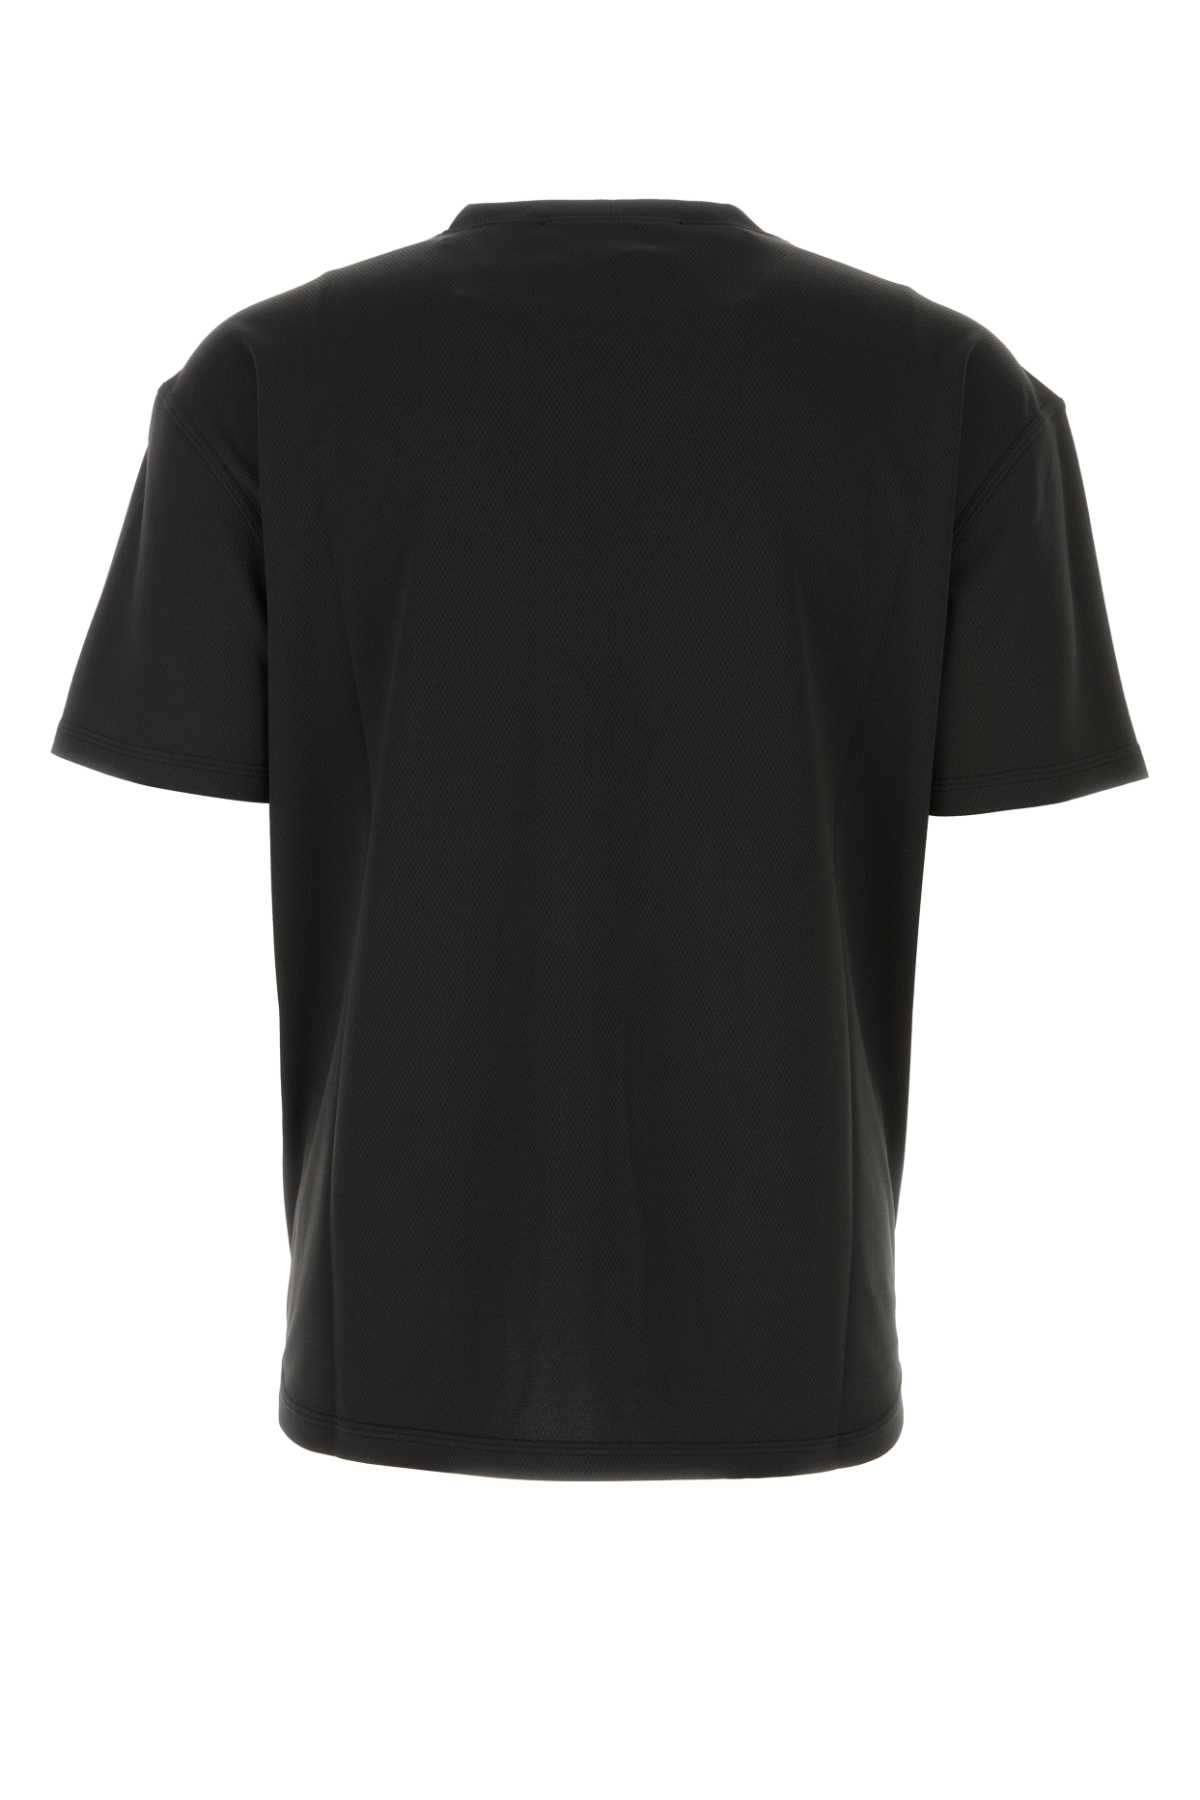 Shop Alyx Black Mesh T-shirt